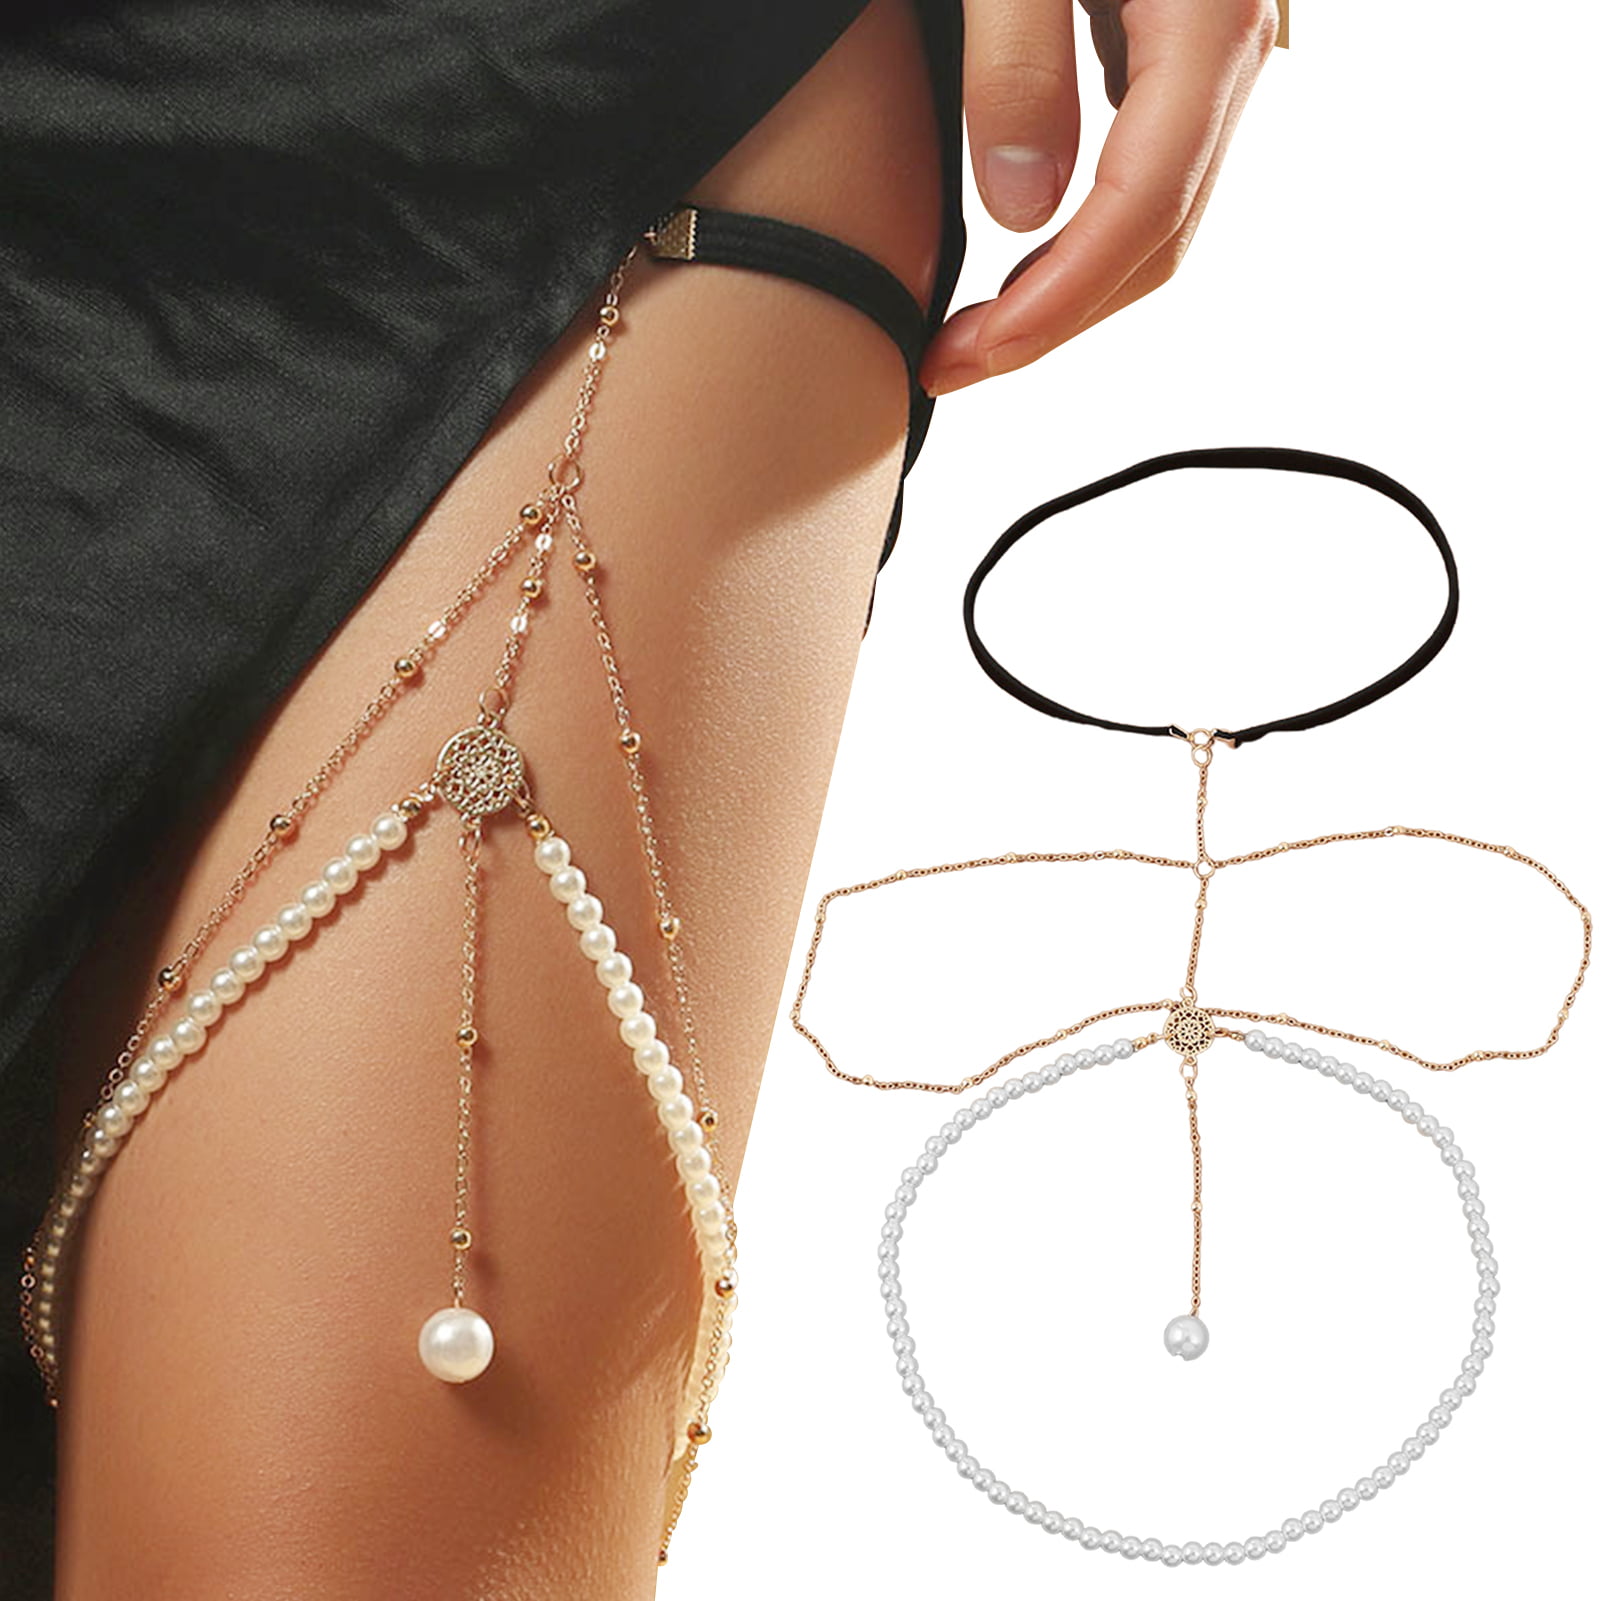 Leg Chains Body Pendant Body Jewelry Accessories for Women Full Body Pendant Legs Body Jewelry Beach Jewelry